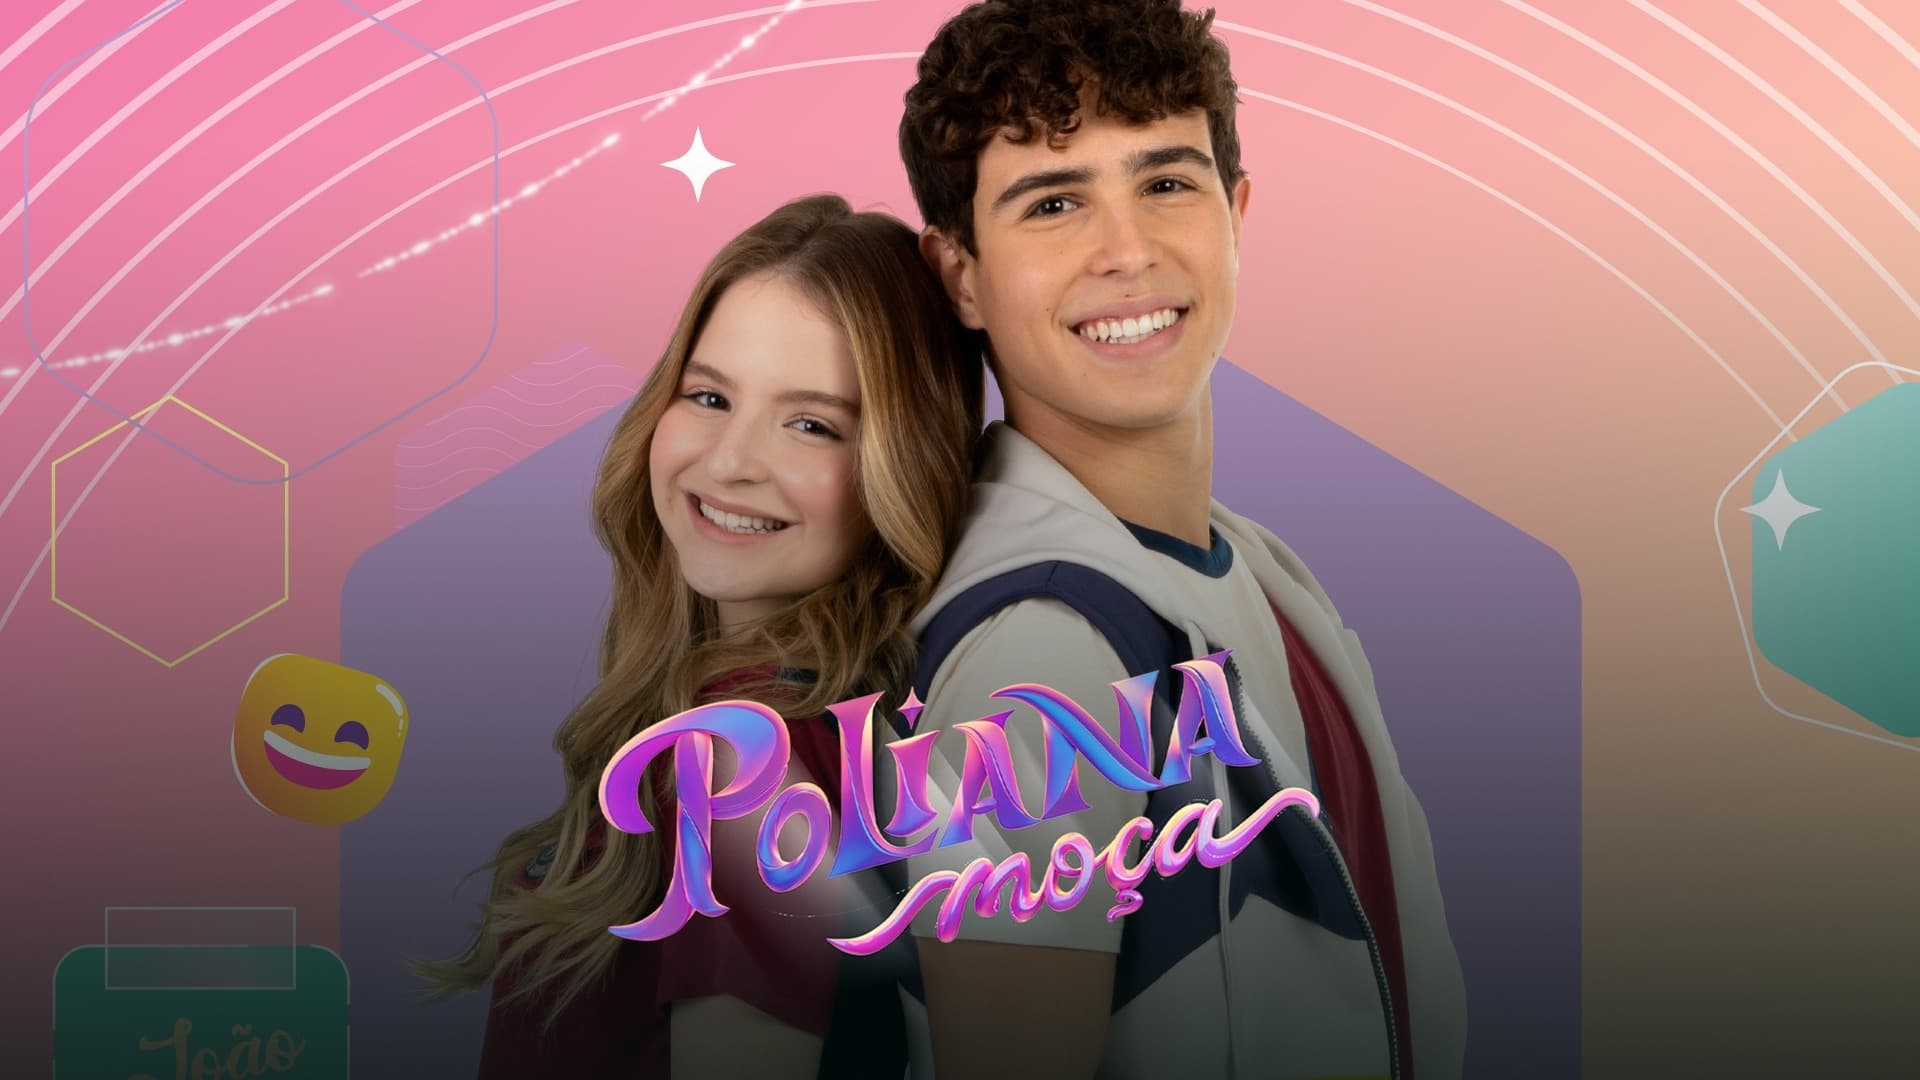 Poliana Moça - Season 1 Episode 190 : Episode 190